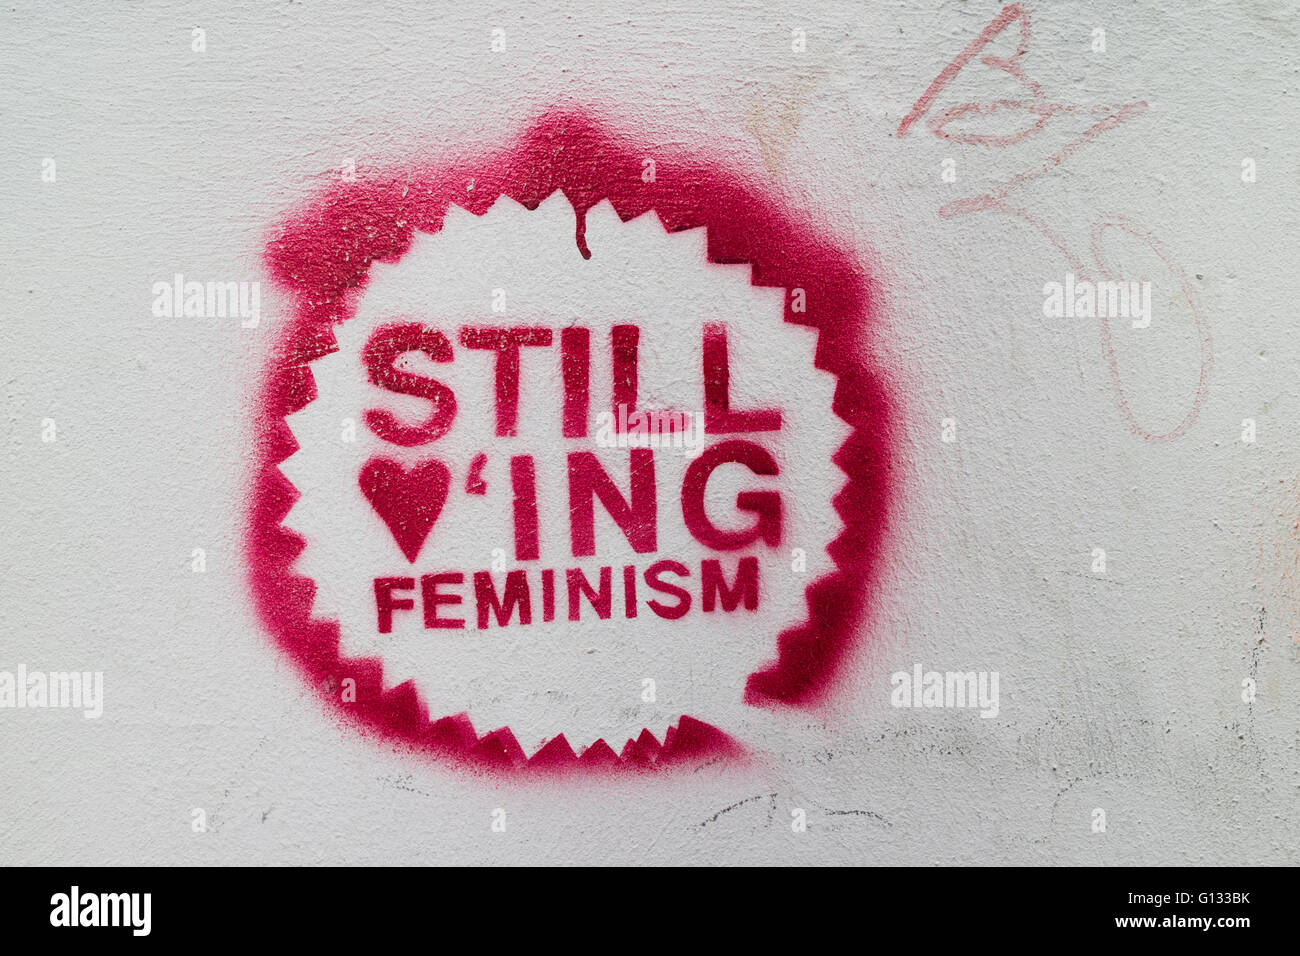 Feminist graffiti on a wall Stock Photo